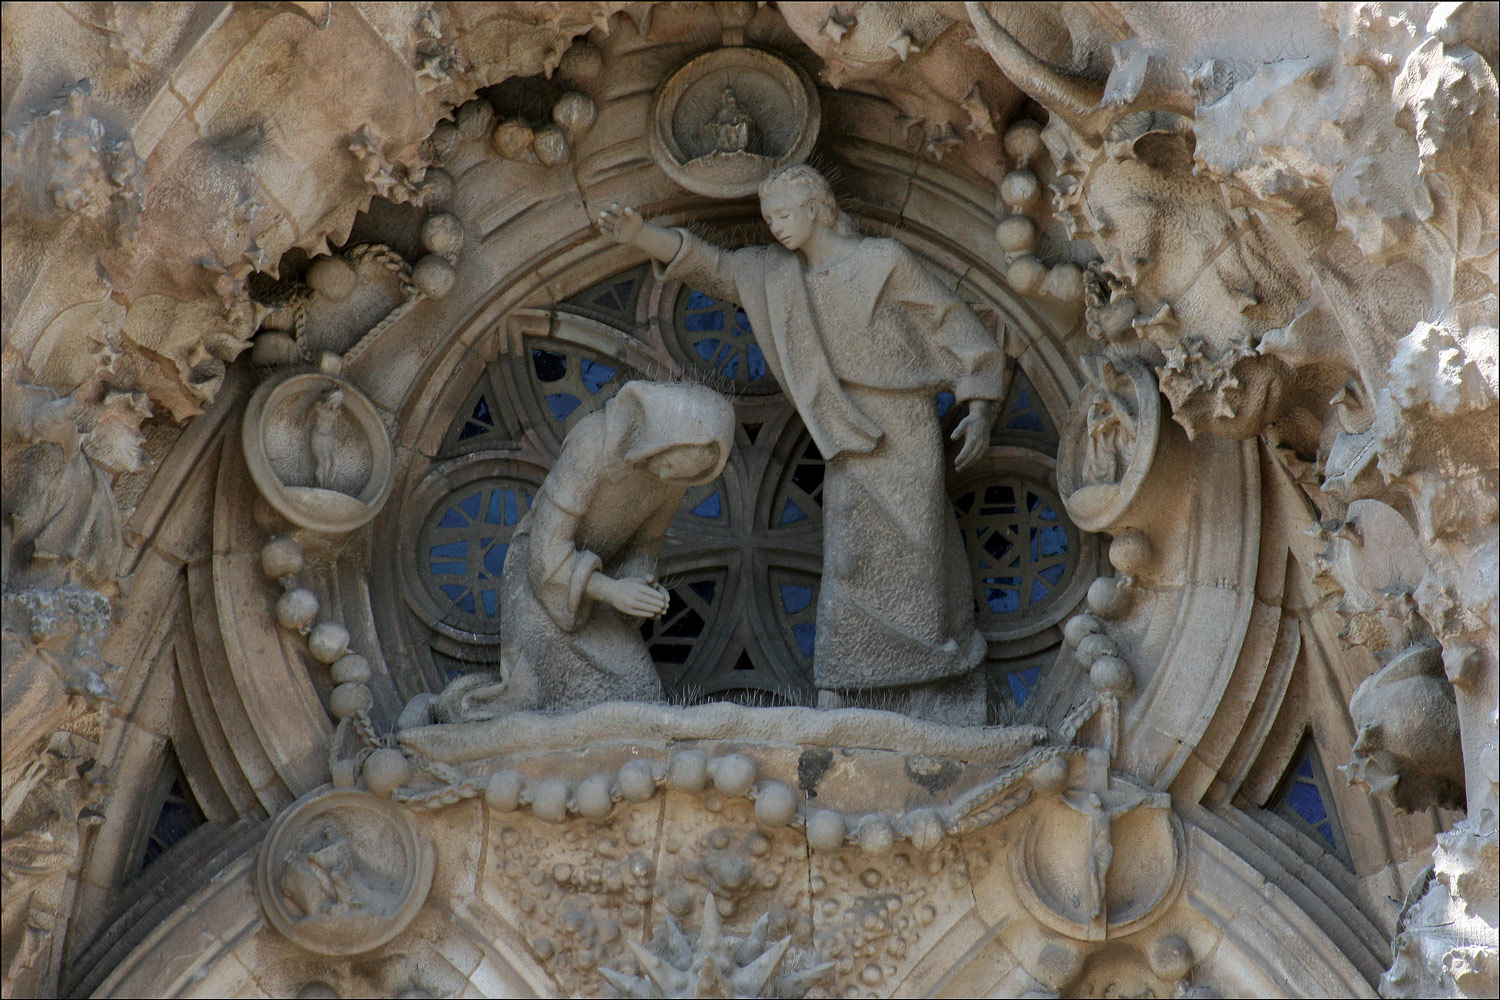 Sagrada Familia by Gaudi - Basilica in Barcelona, Spain - 137 Year Project 42